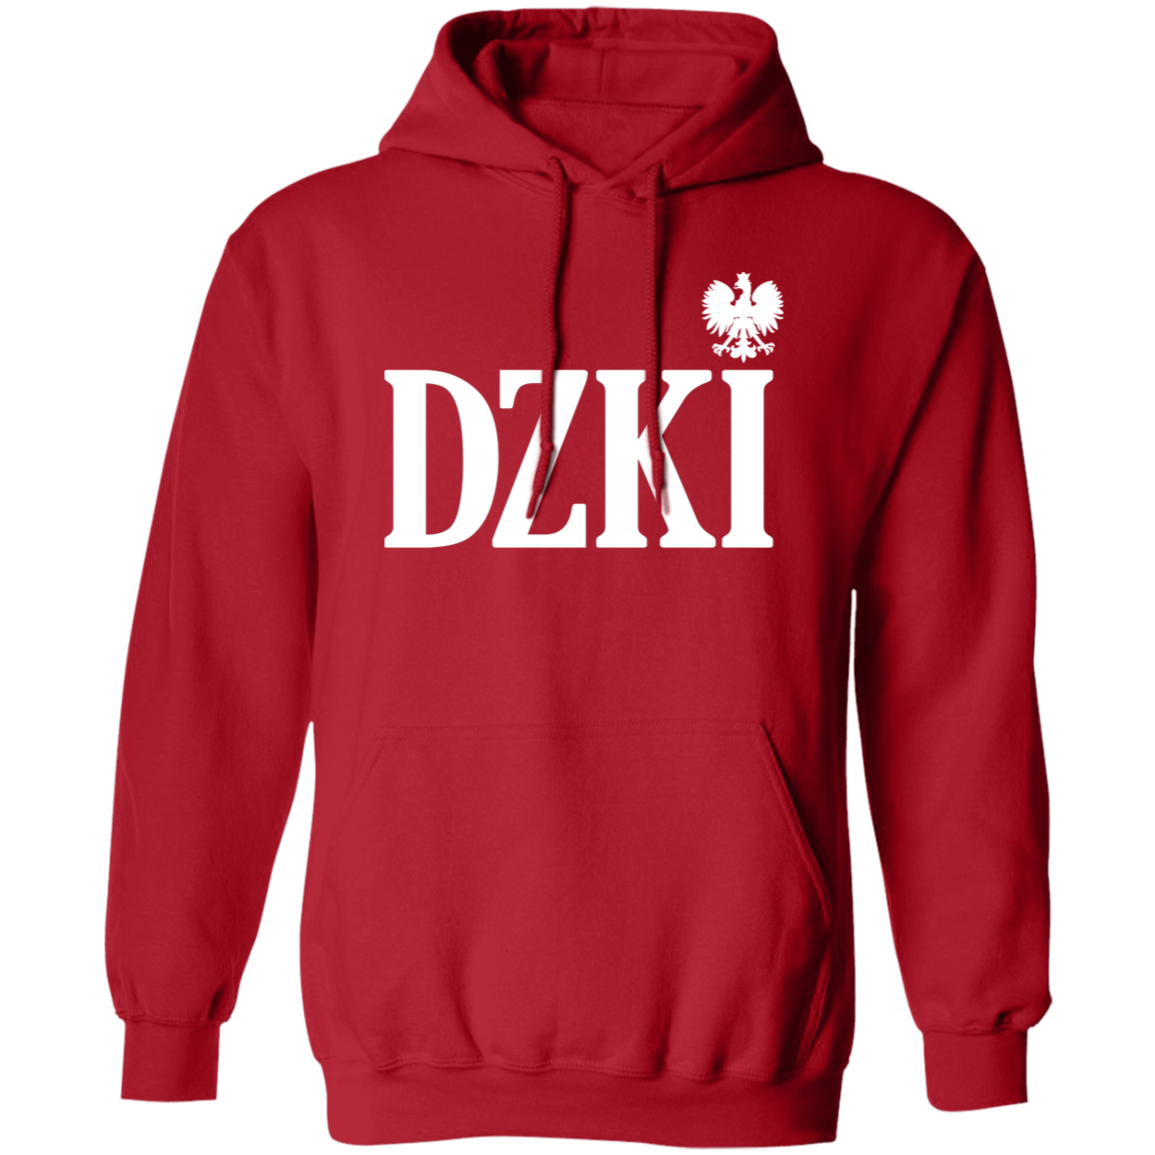 DZKI Polish Surname Ending Apparel CustomCat G185 Pullover Hoodie Red S